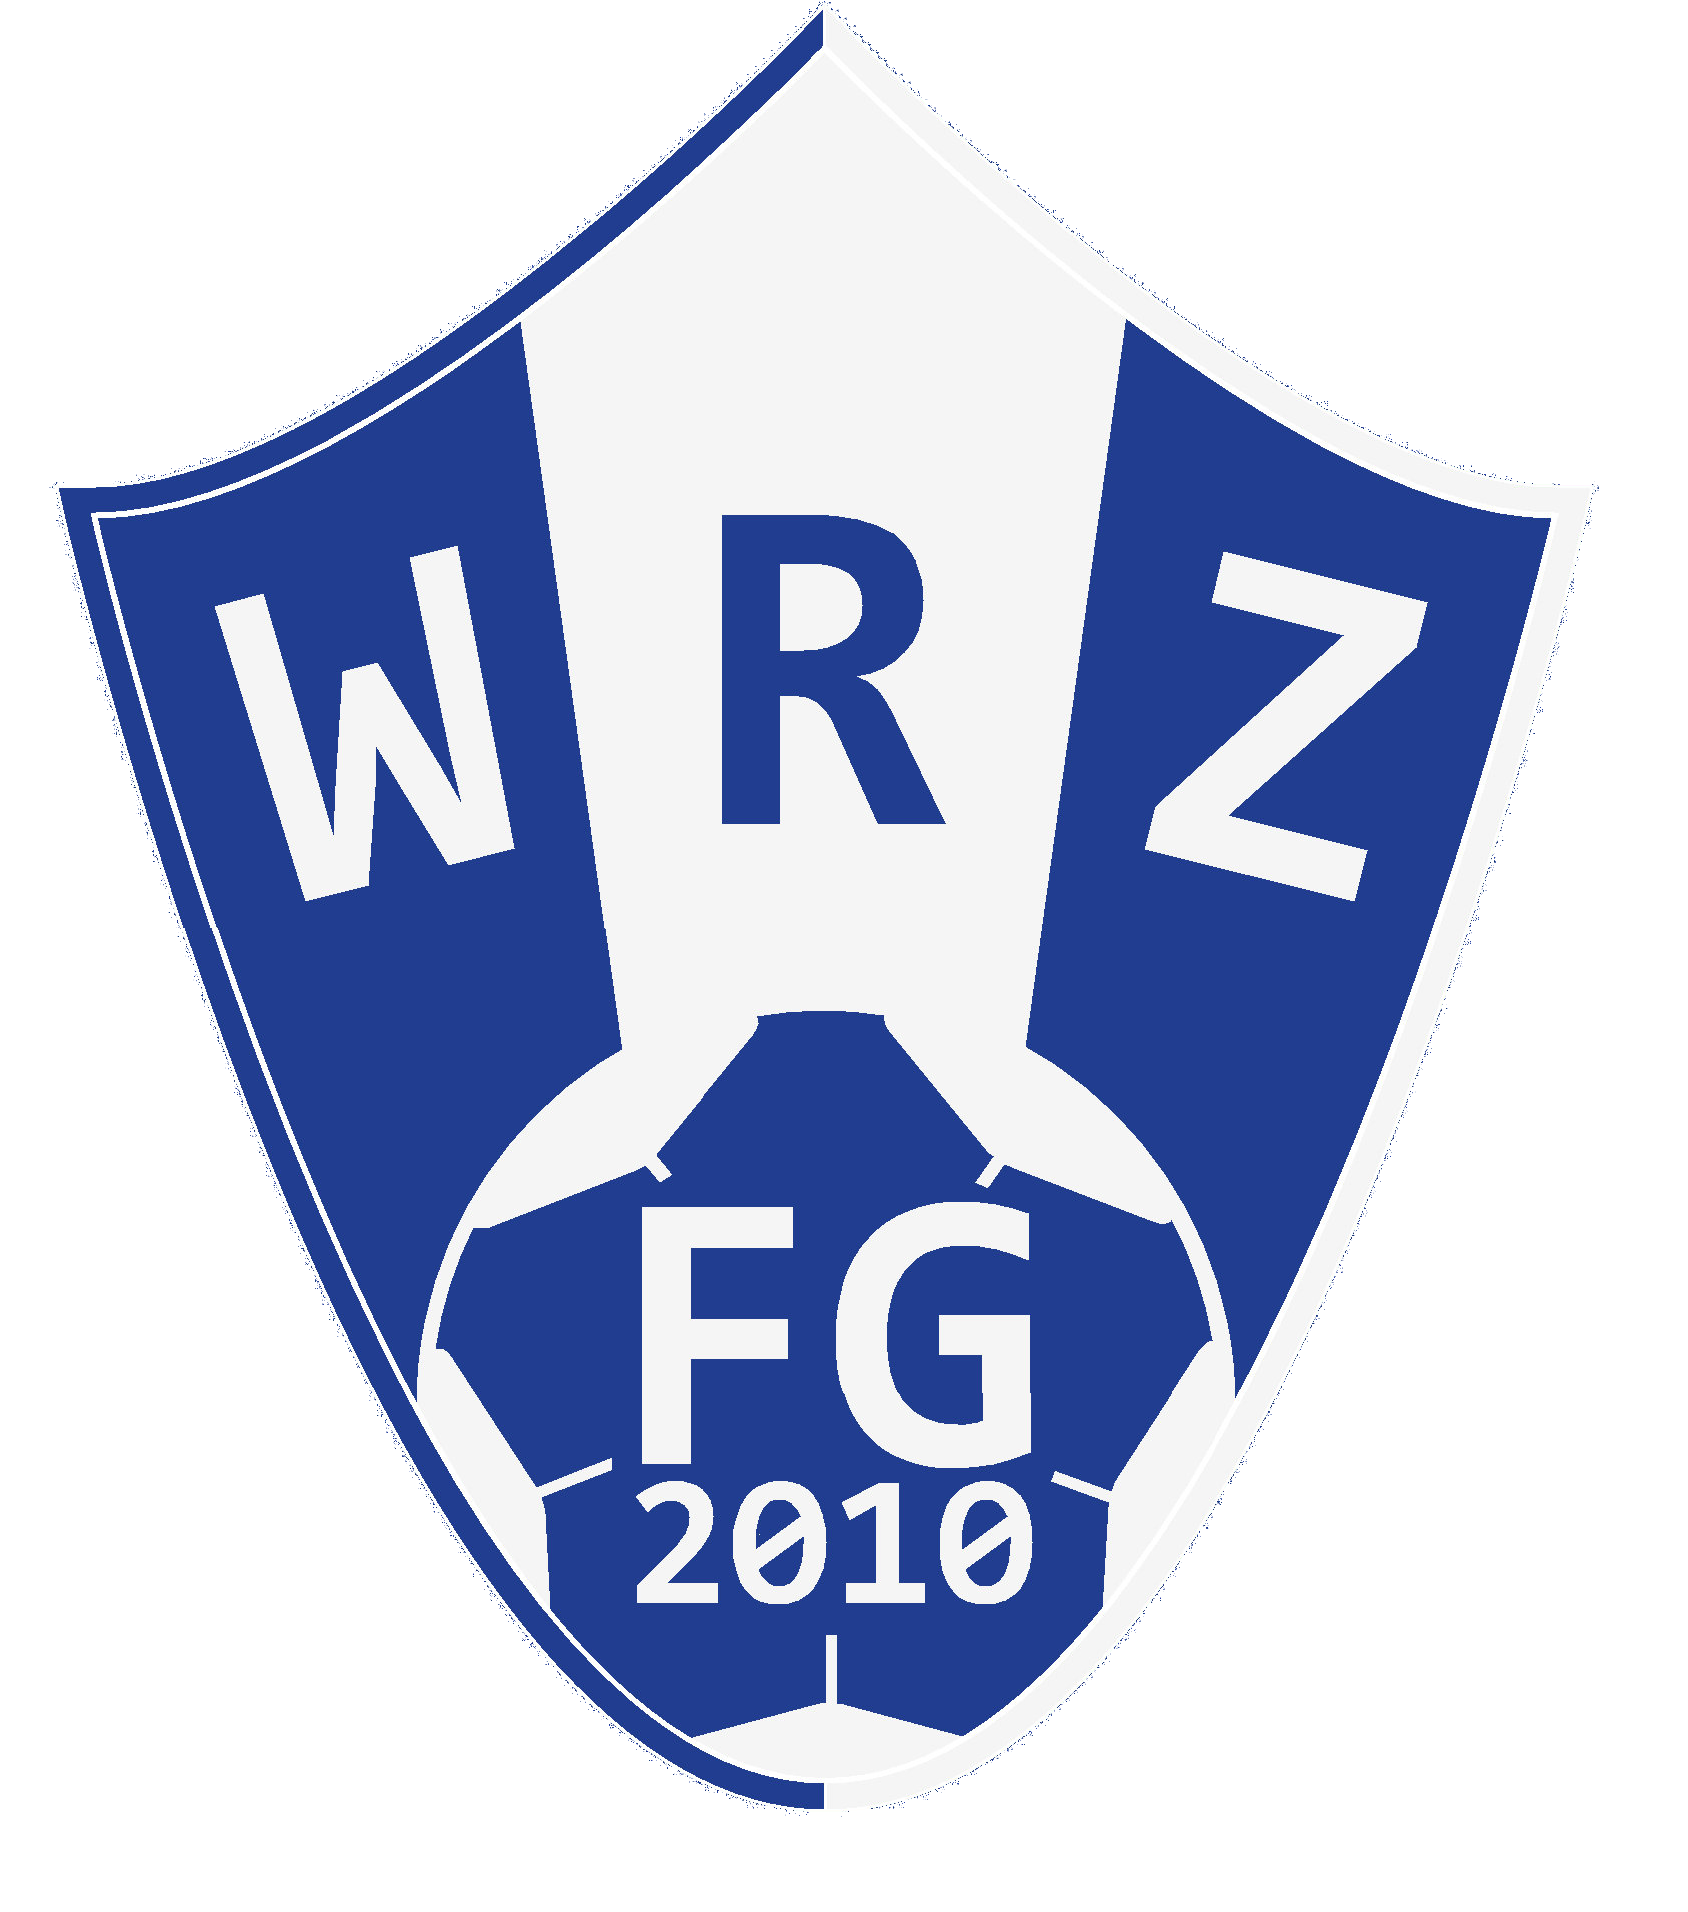 FG 2010 WRZ Logo